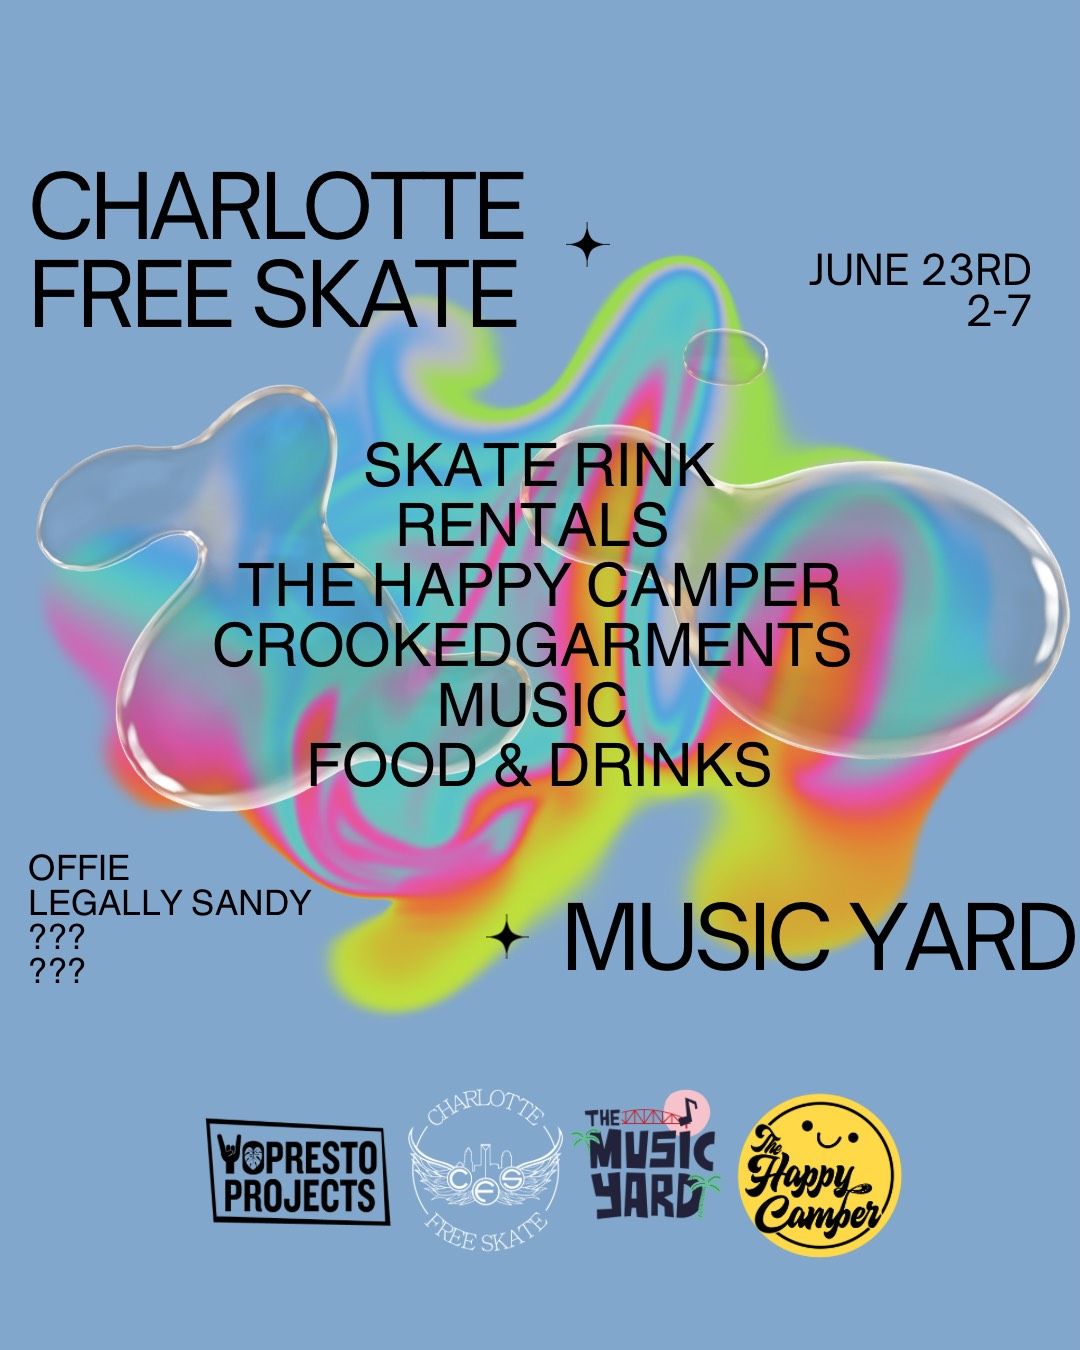 CLT Free Skate @ The Music Yard